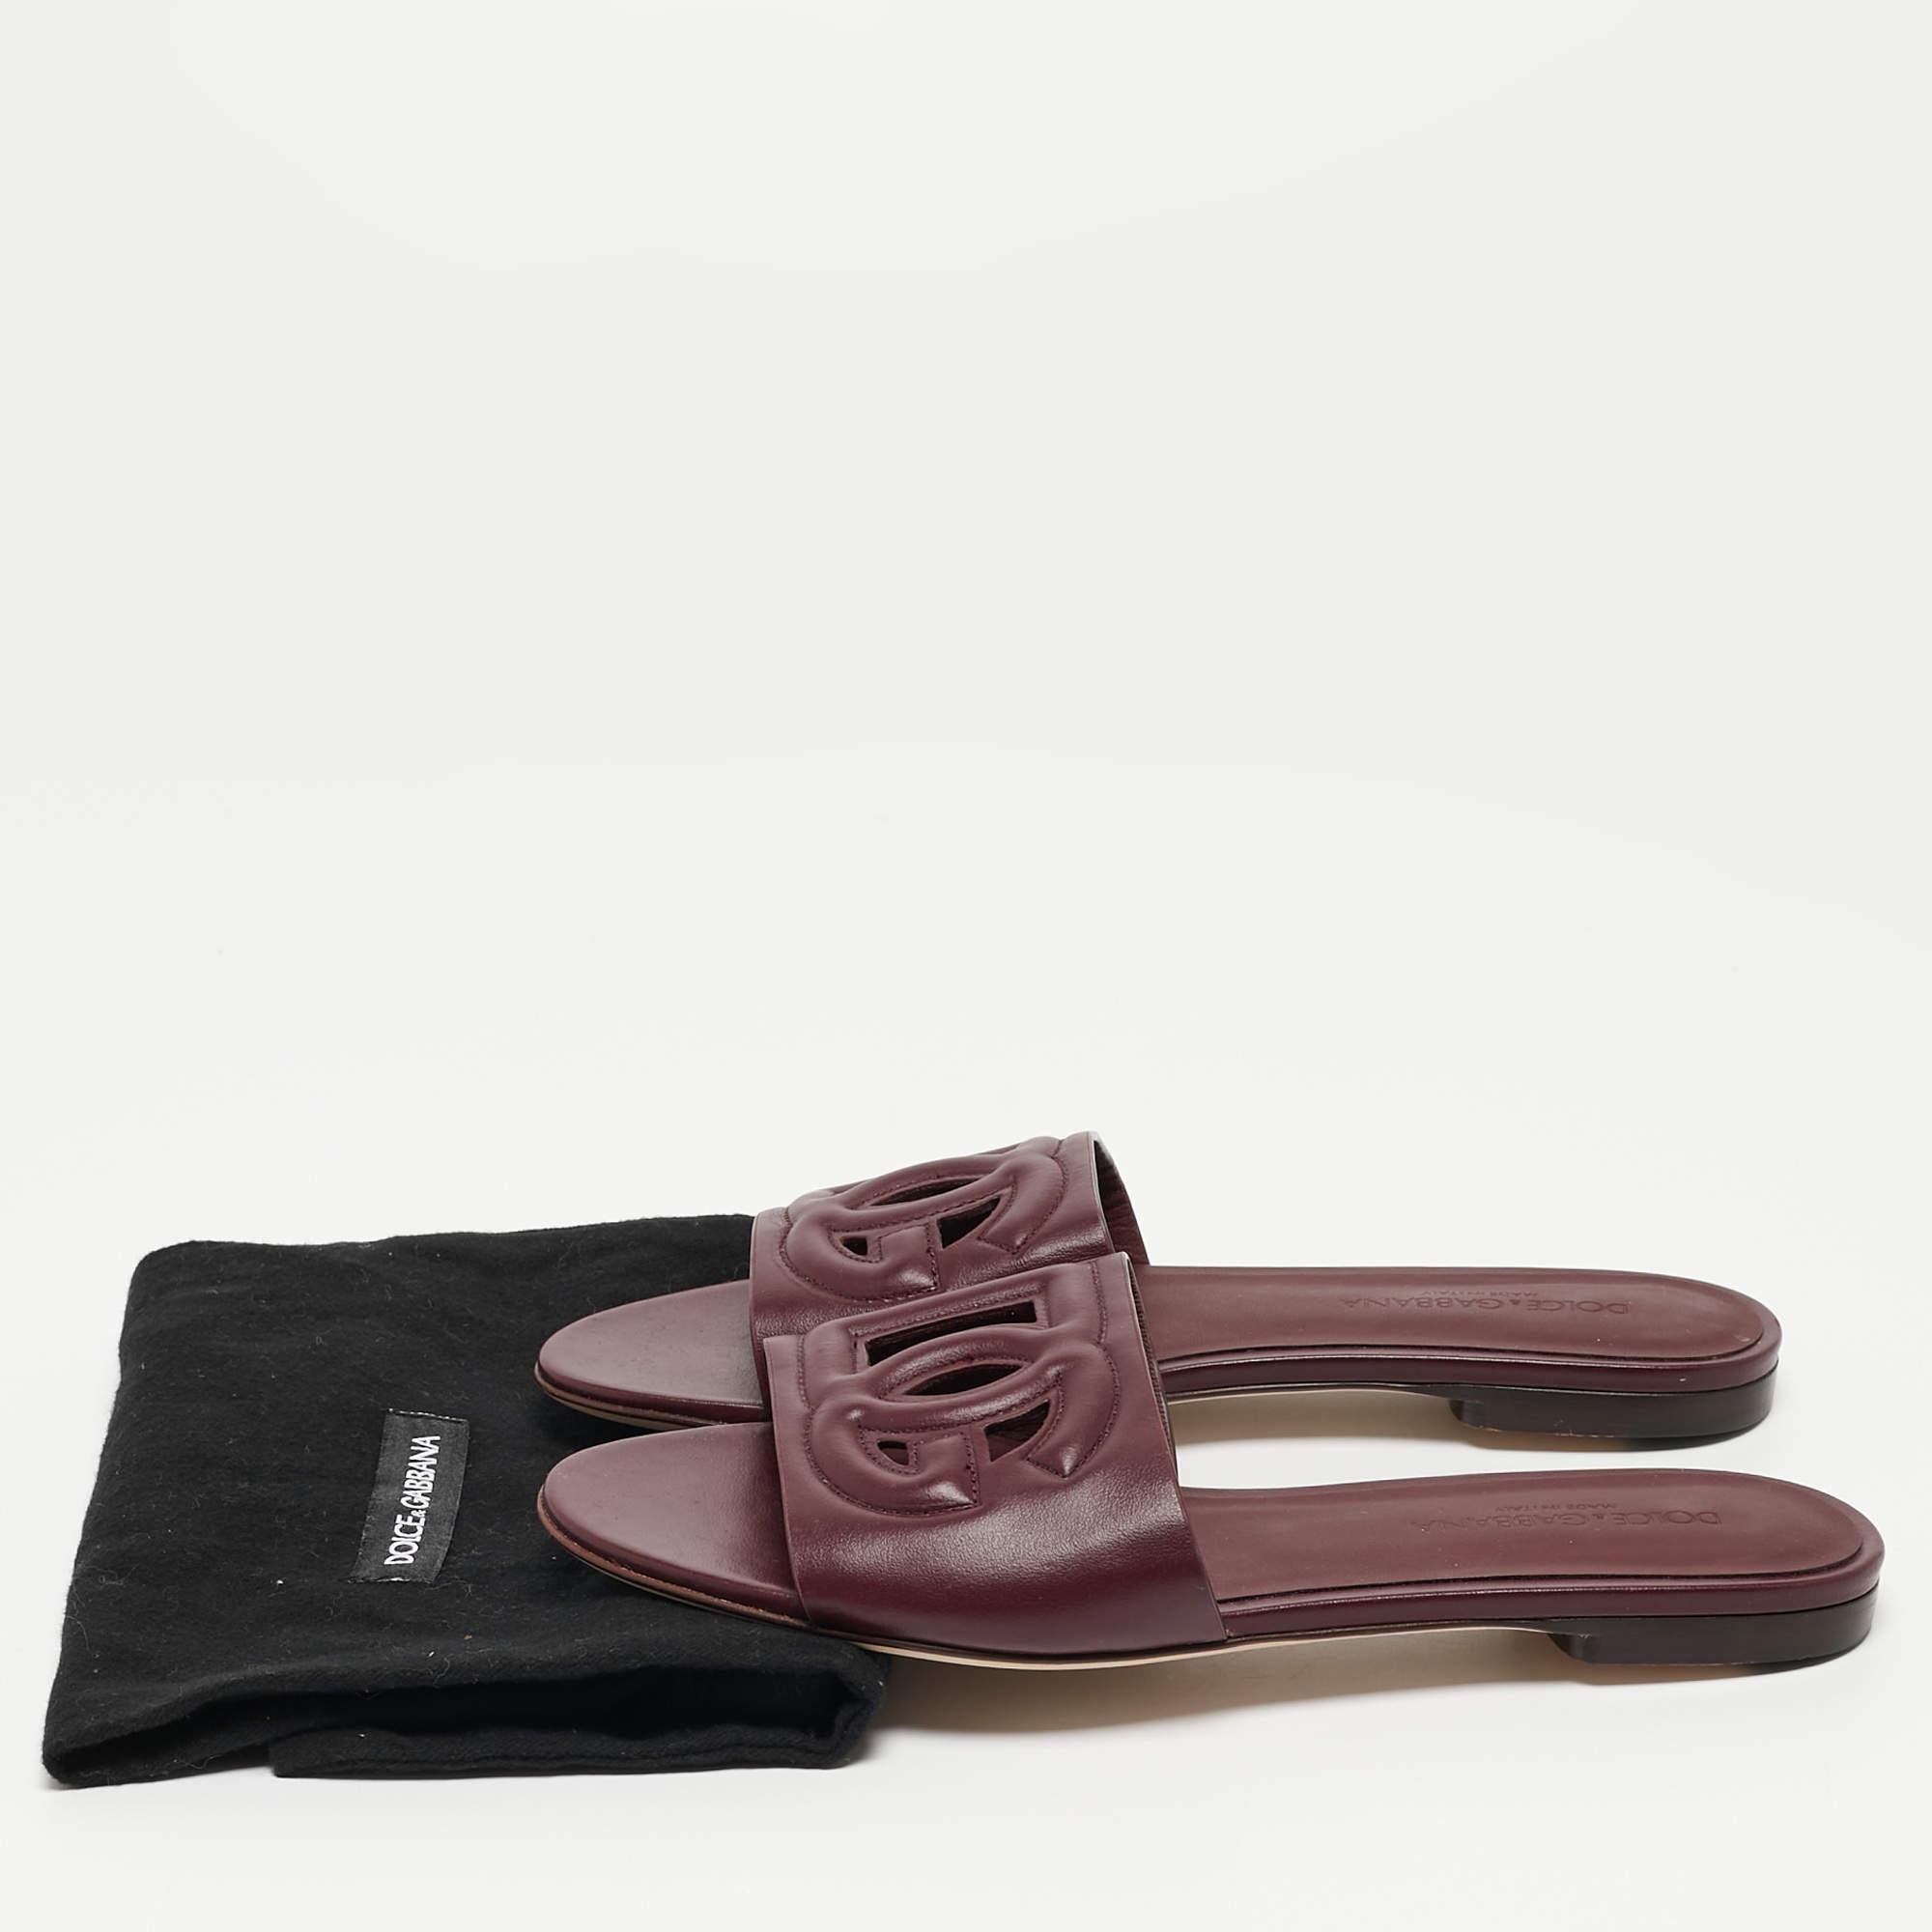 Dolce & Gabbana Burgundy Leather DG Cut Out Flat Slides Size 36 7